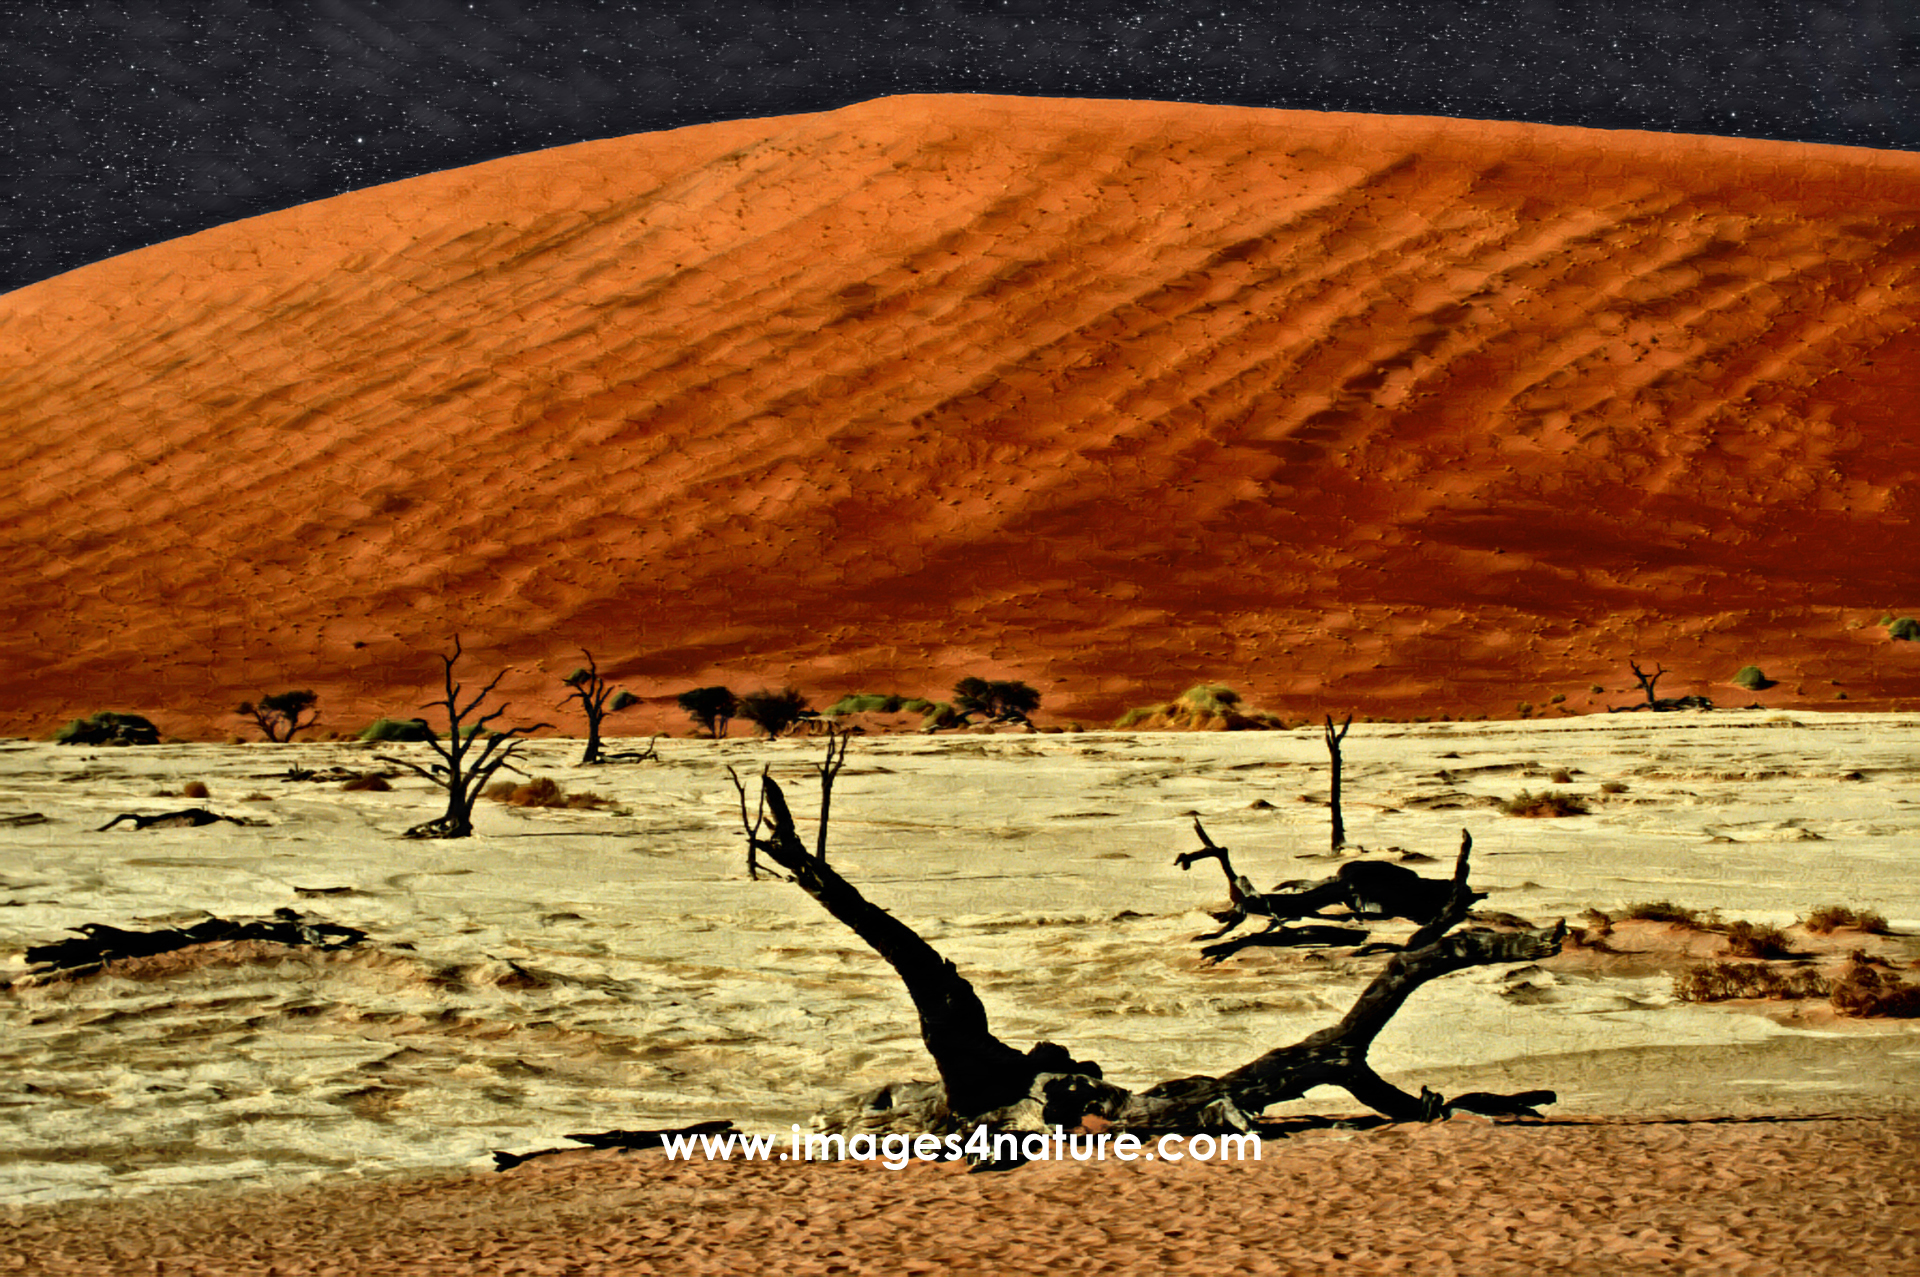 Tree skeletons in saltpan against orange sand dune and night sky